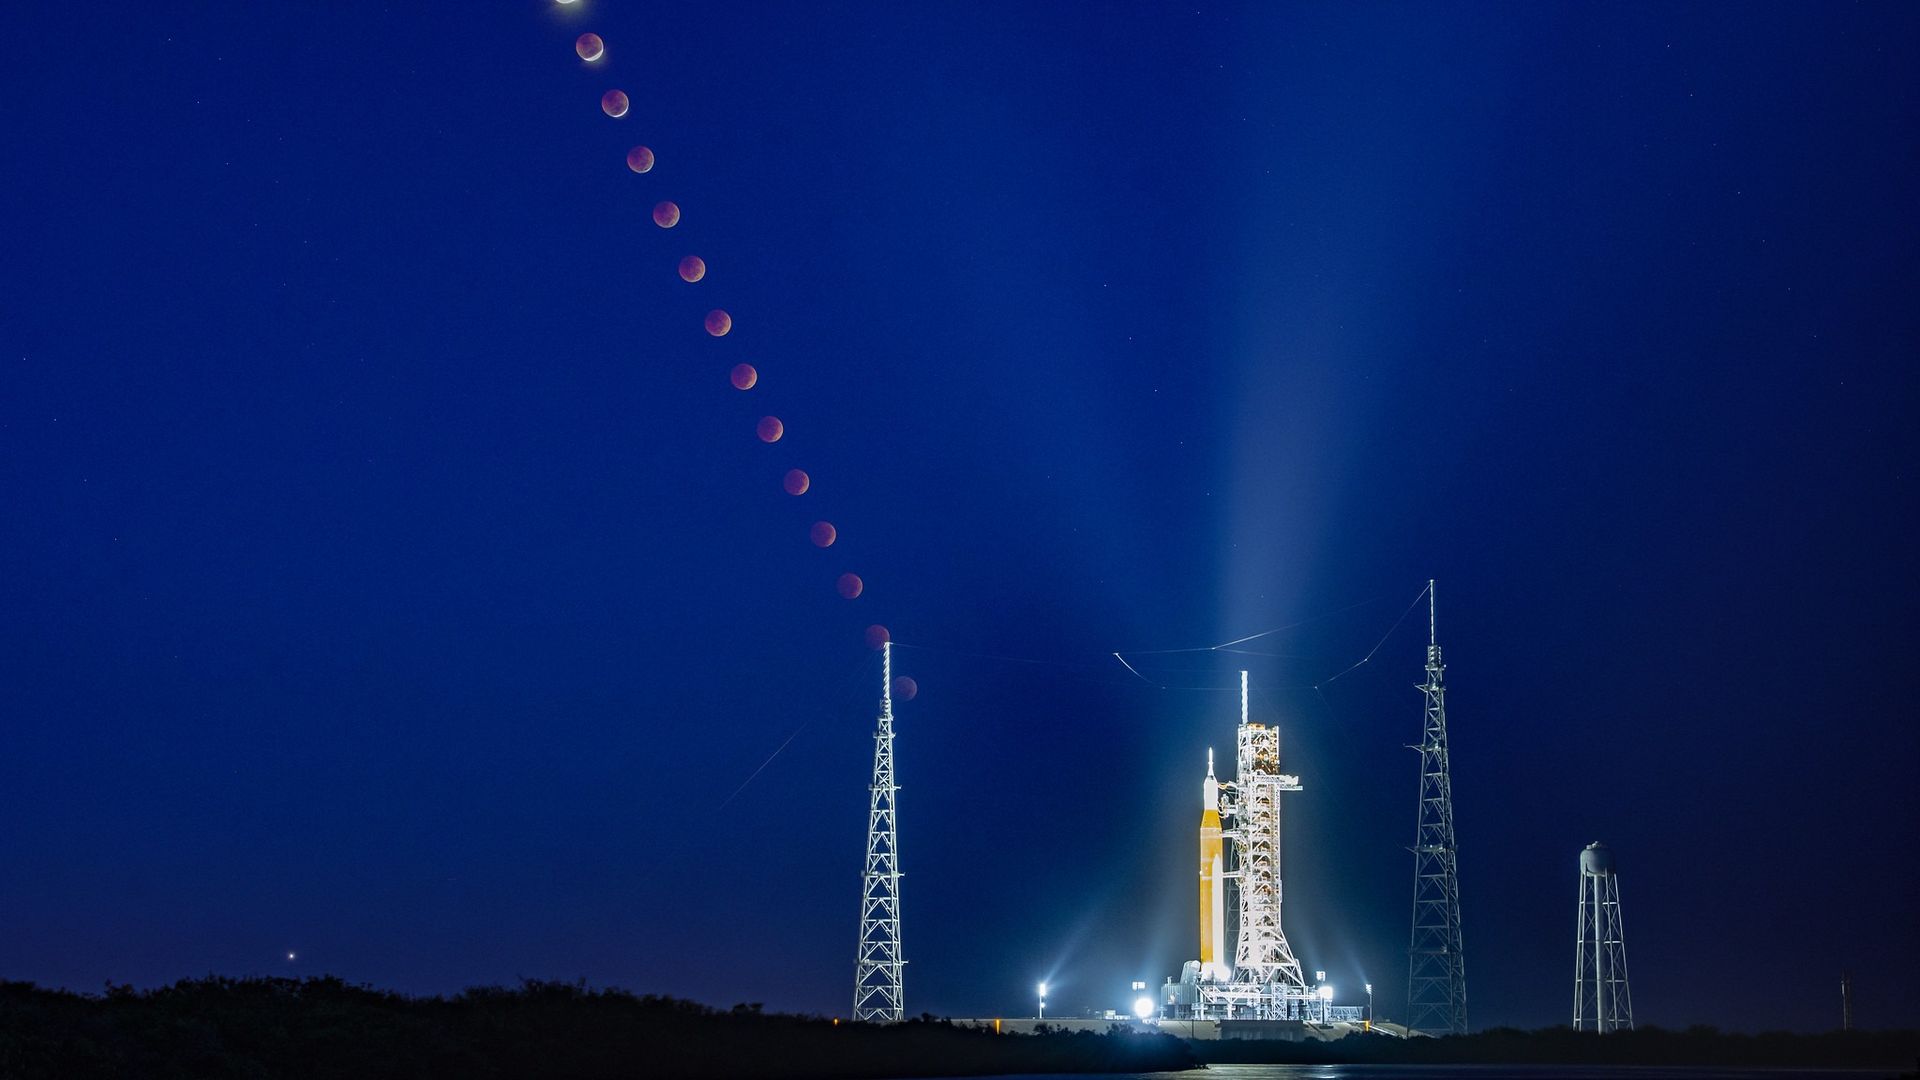 Blood Moon rises over Artemis 1 megarocket preparing for launch in